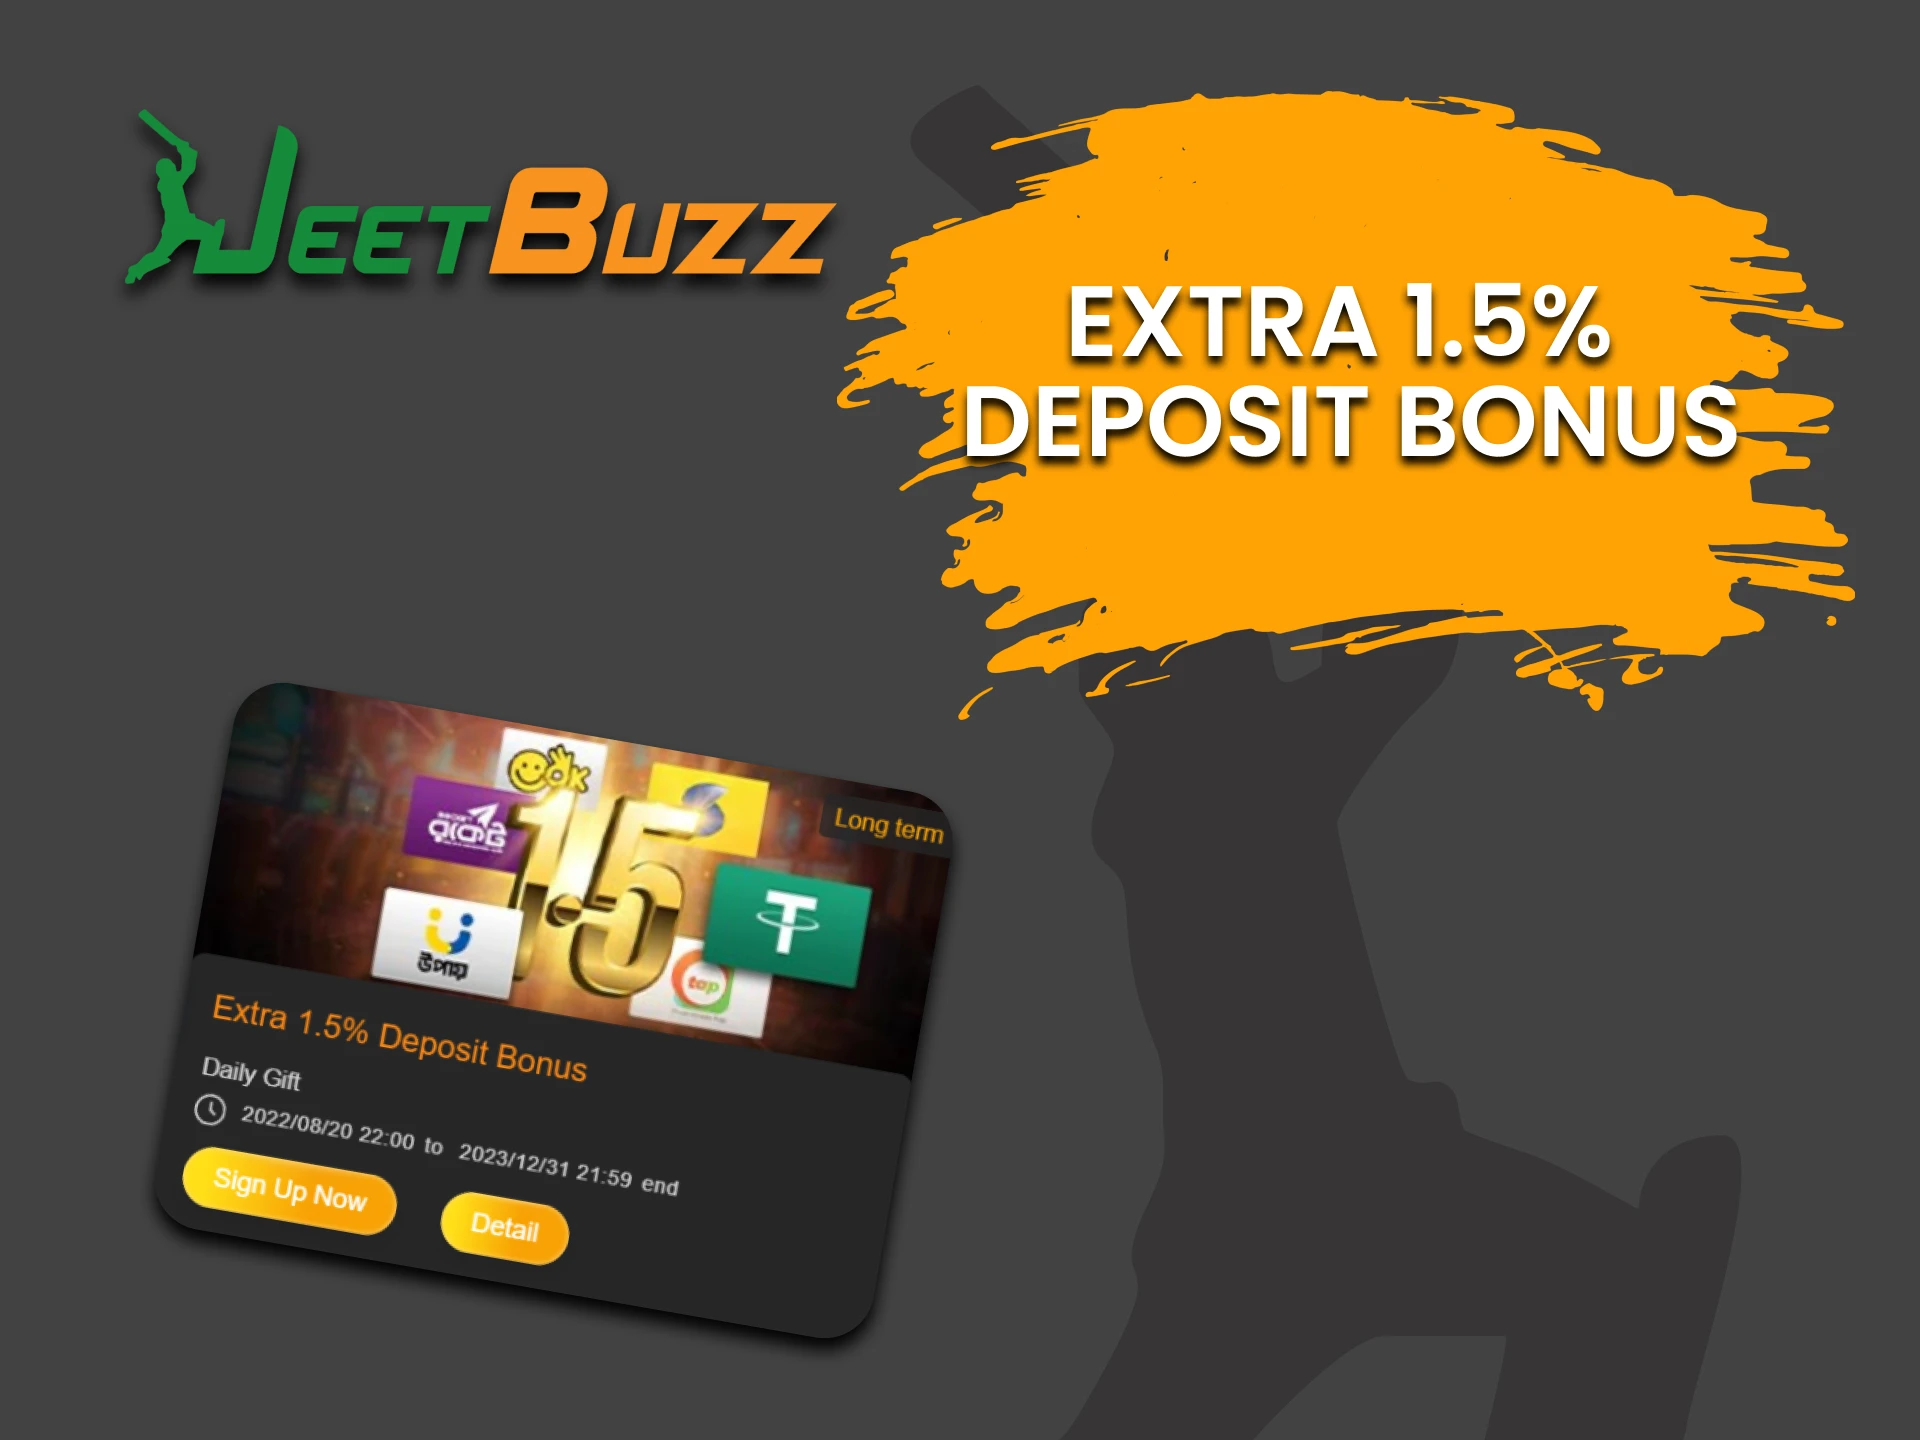 Get an extra deposit bonus from JeetBuzz.